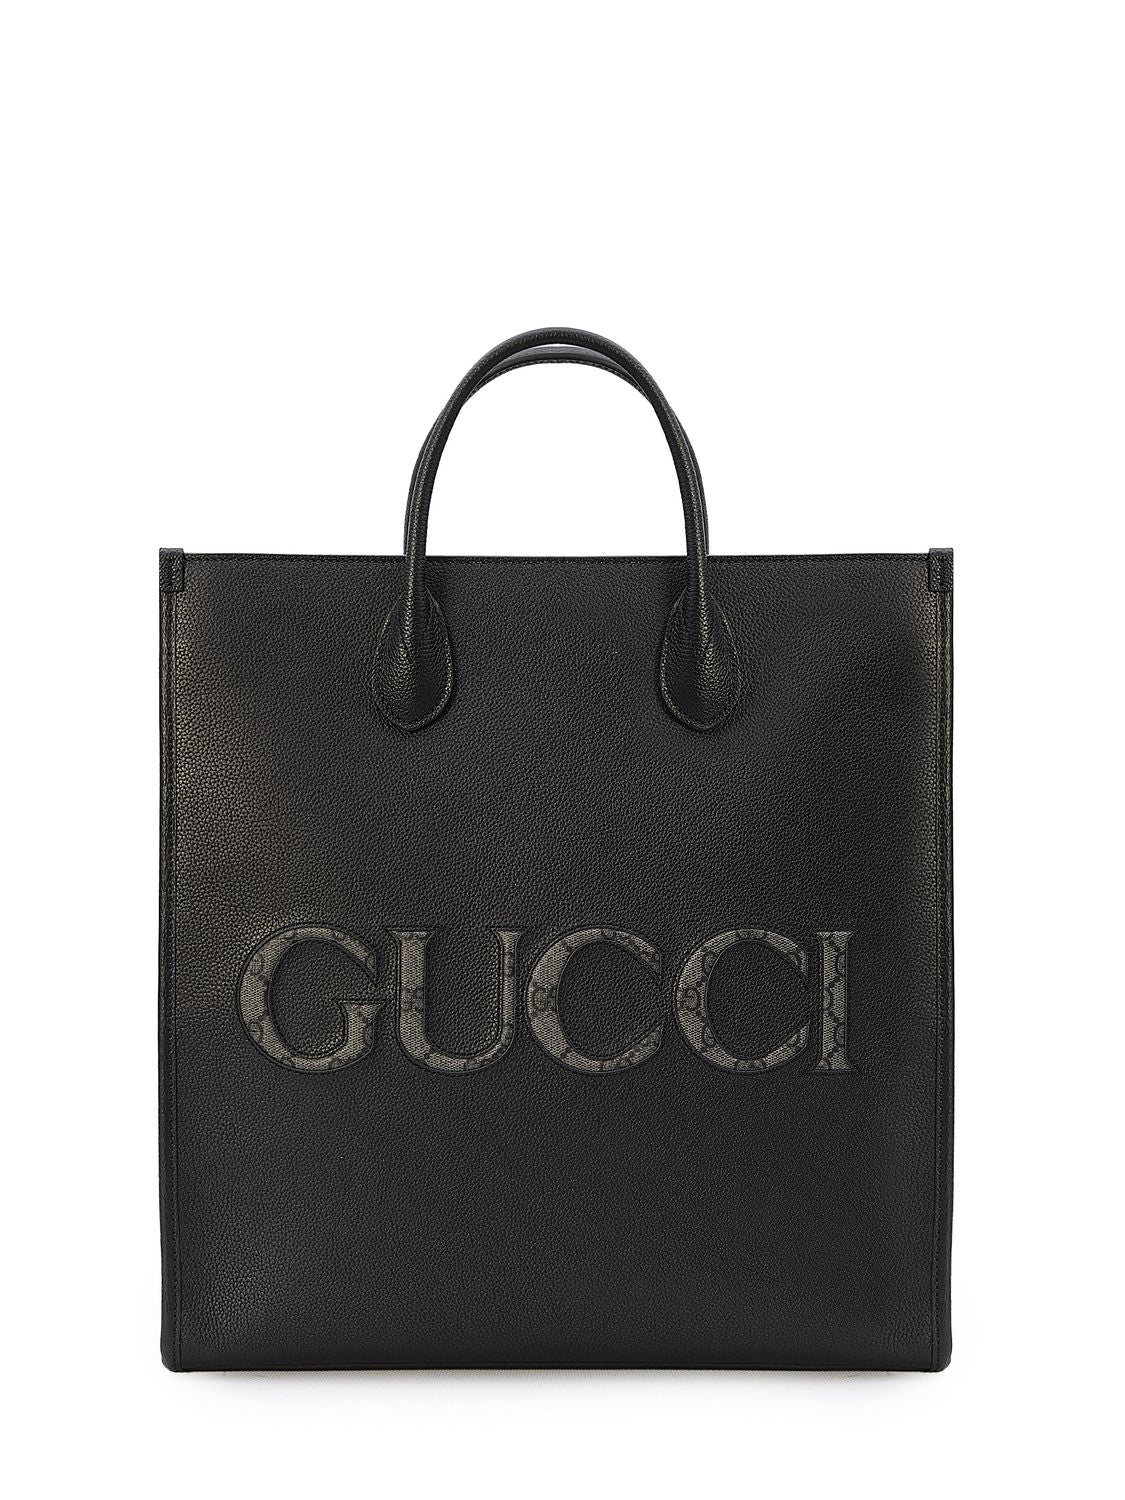 GUCCI Men's Black Leather Shopping Handbag with GG Supreme Trim